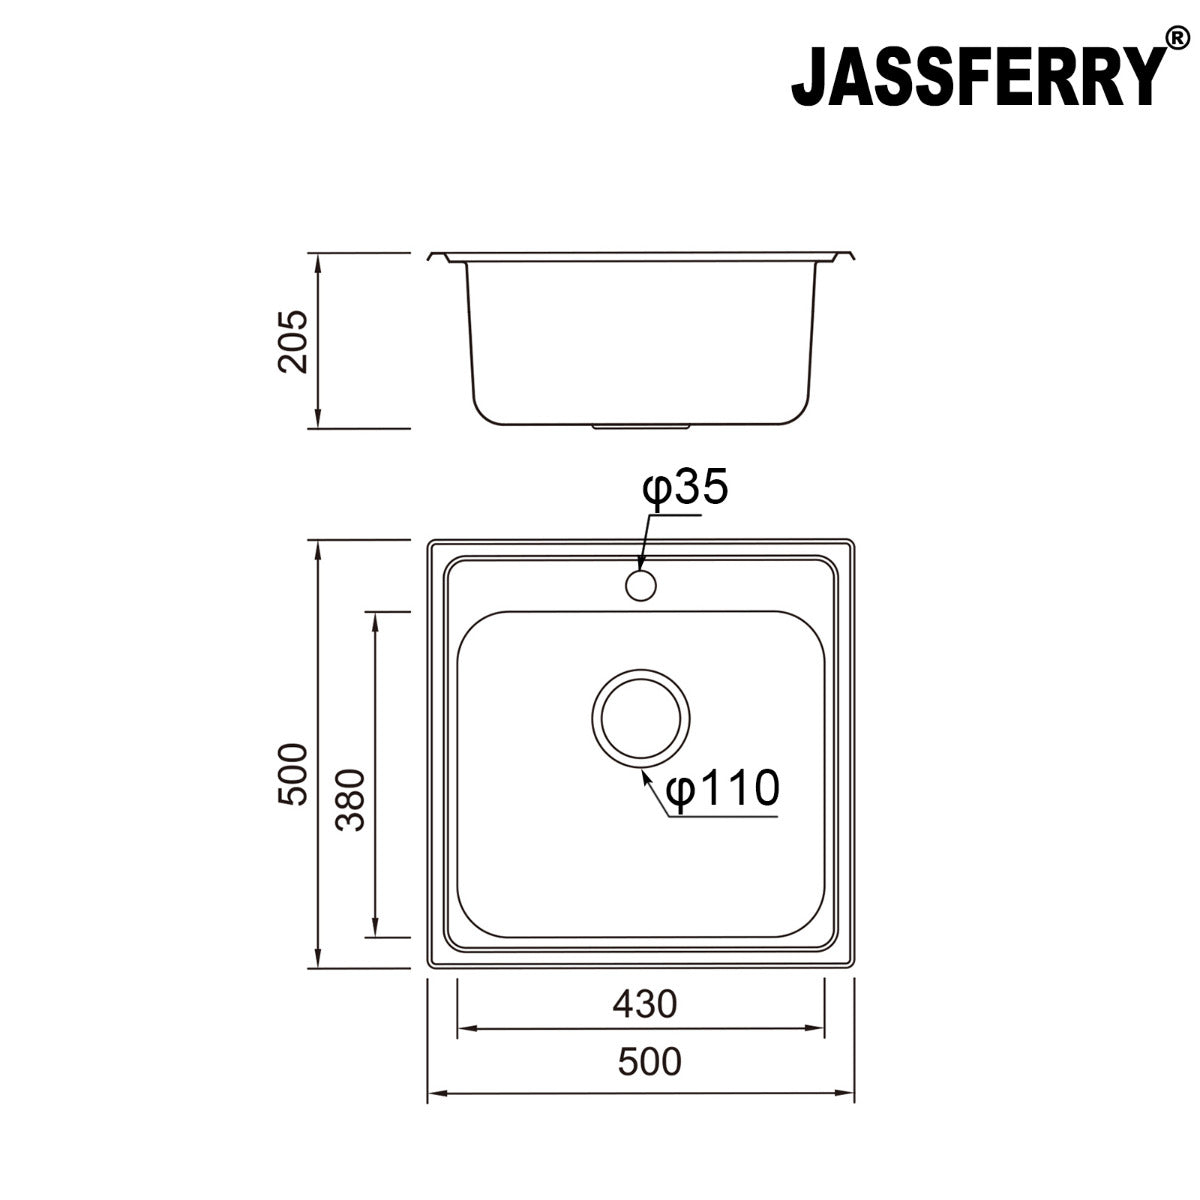 JassferryJASSFERRY Drop-in Stainless Steel Single Square Bowl Kitchen Campervan RV Sink with Pre-drilled Tap HoleKitchen Sink